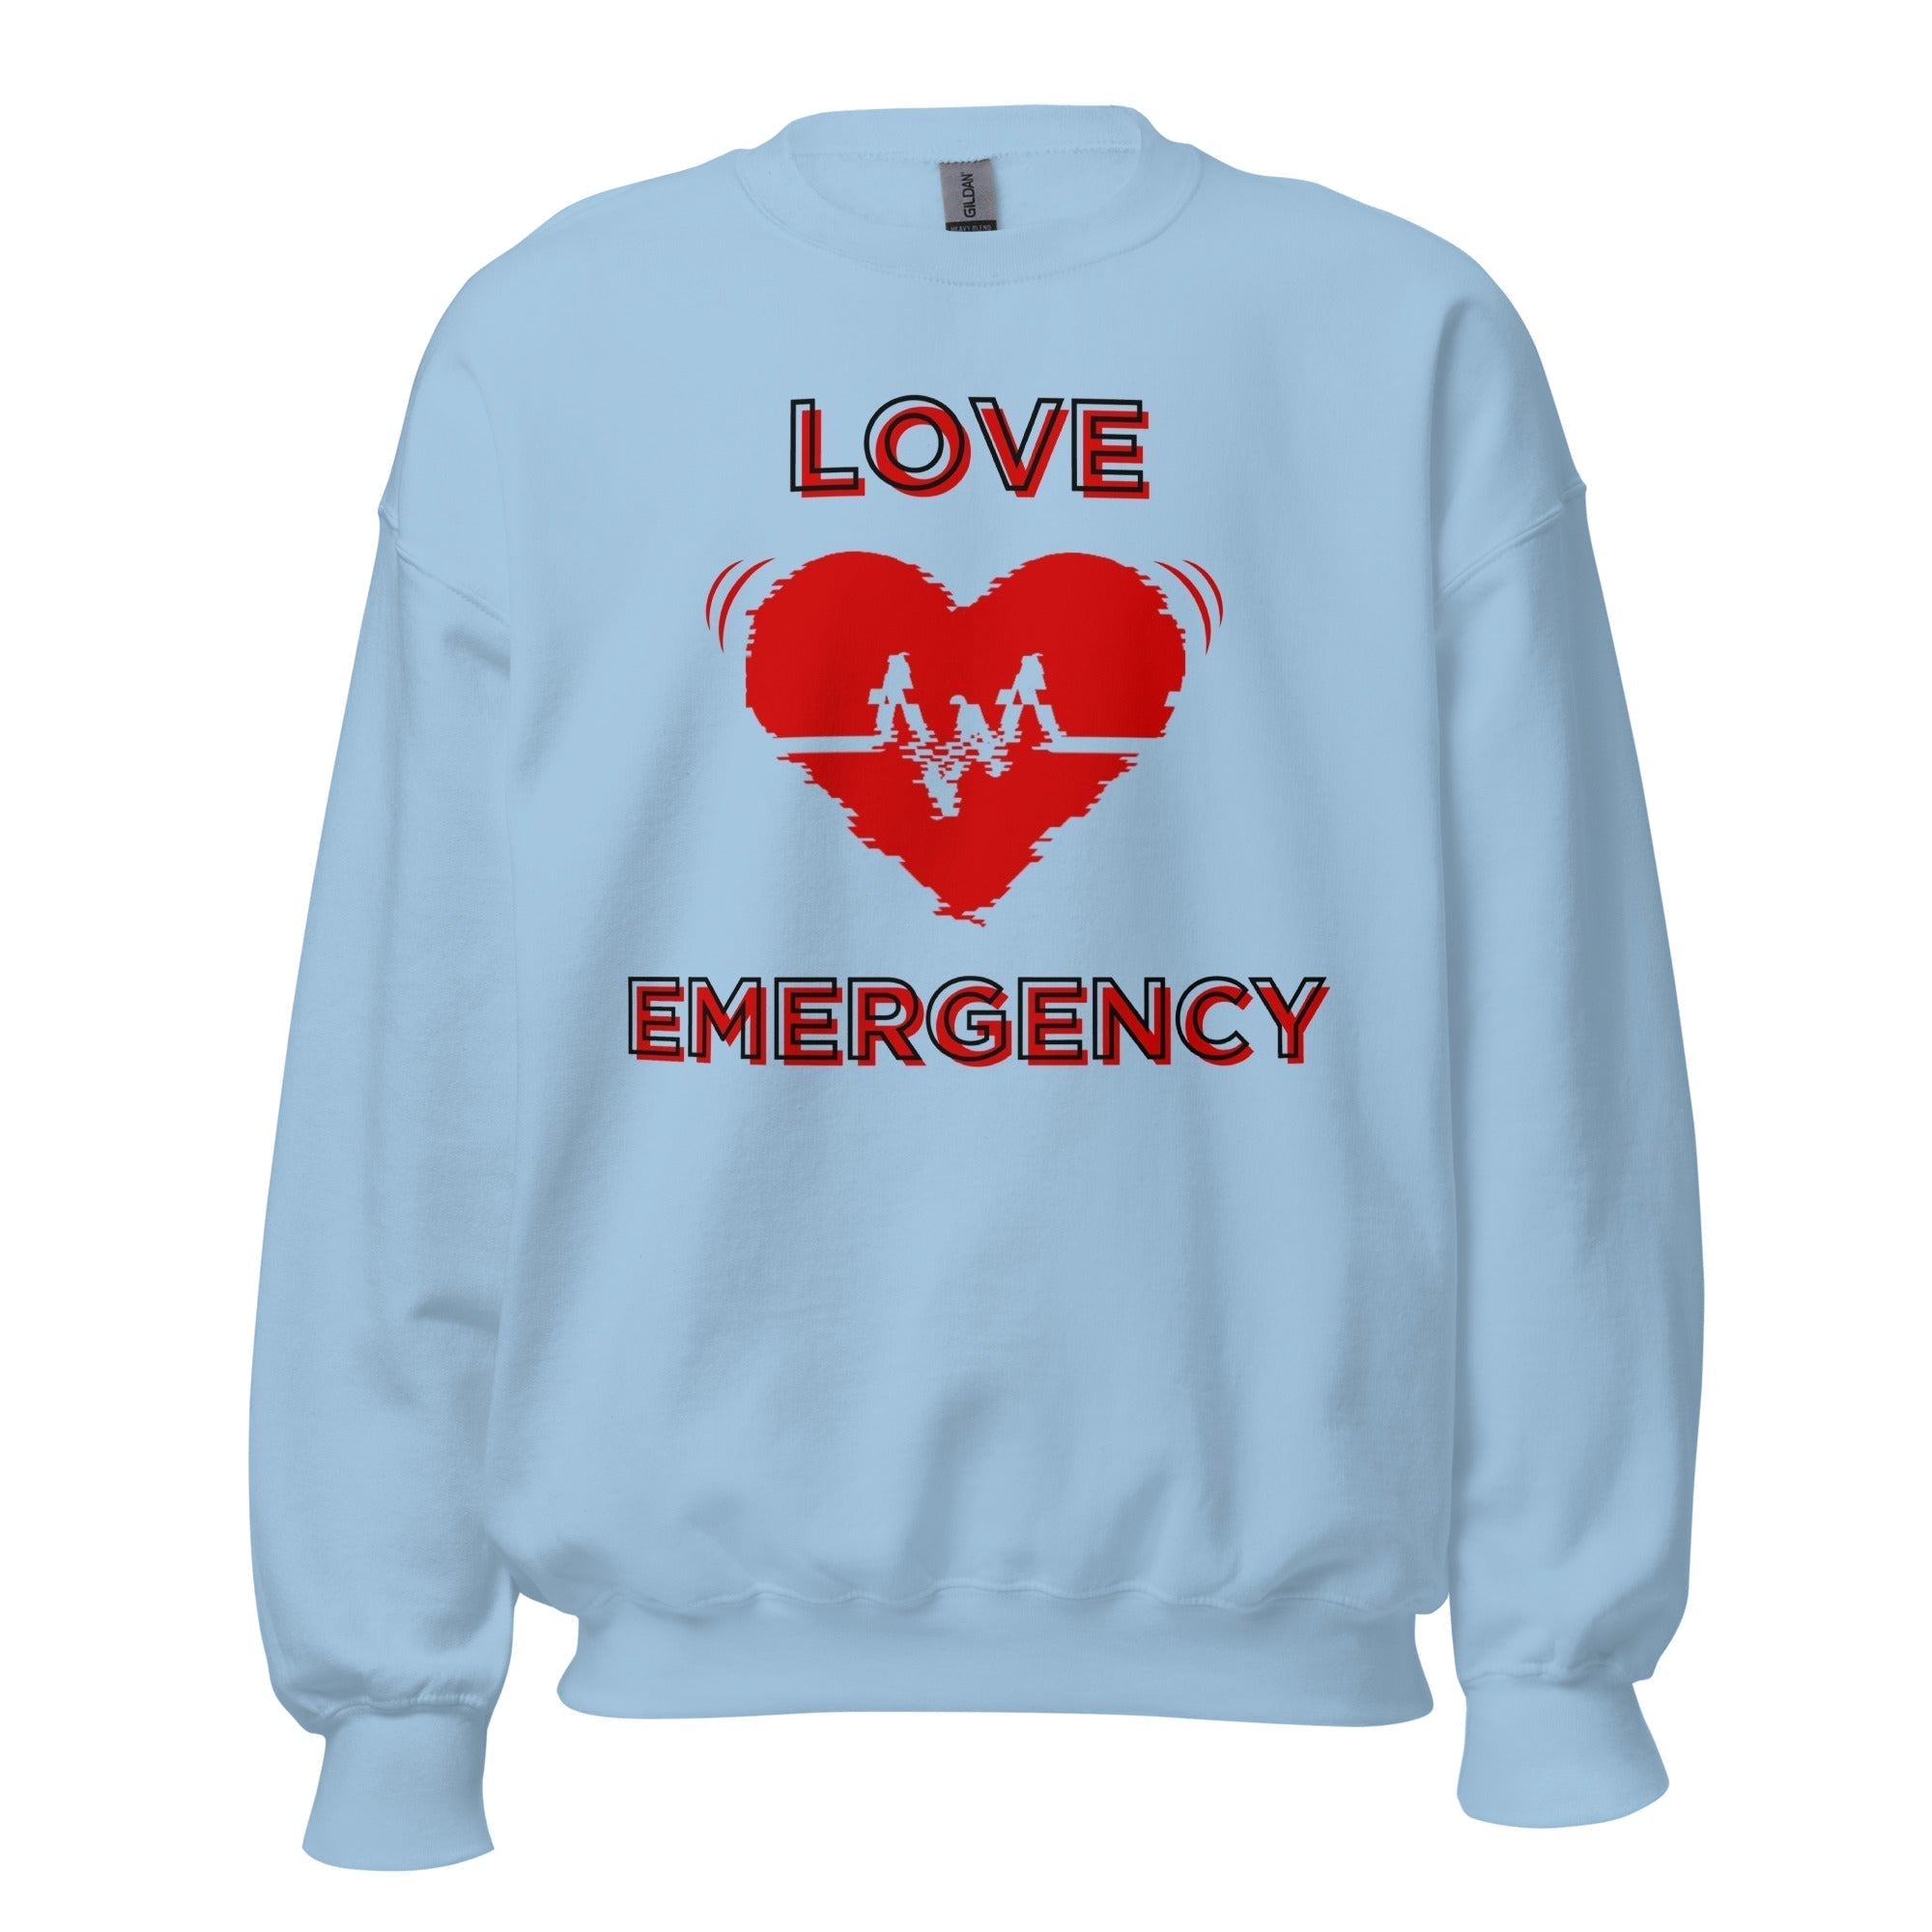 Unisex Crew Neck Sweatshirt - Love Emergency - GRAPHIC T-SHIRTS